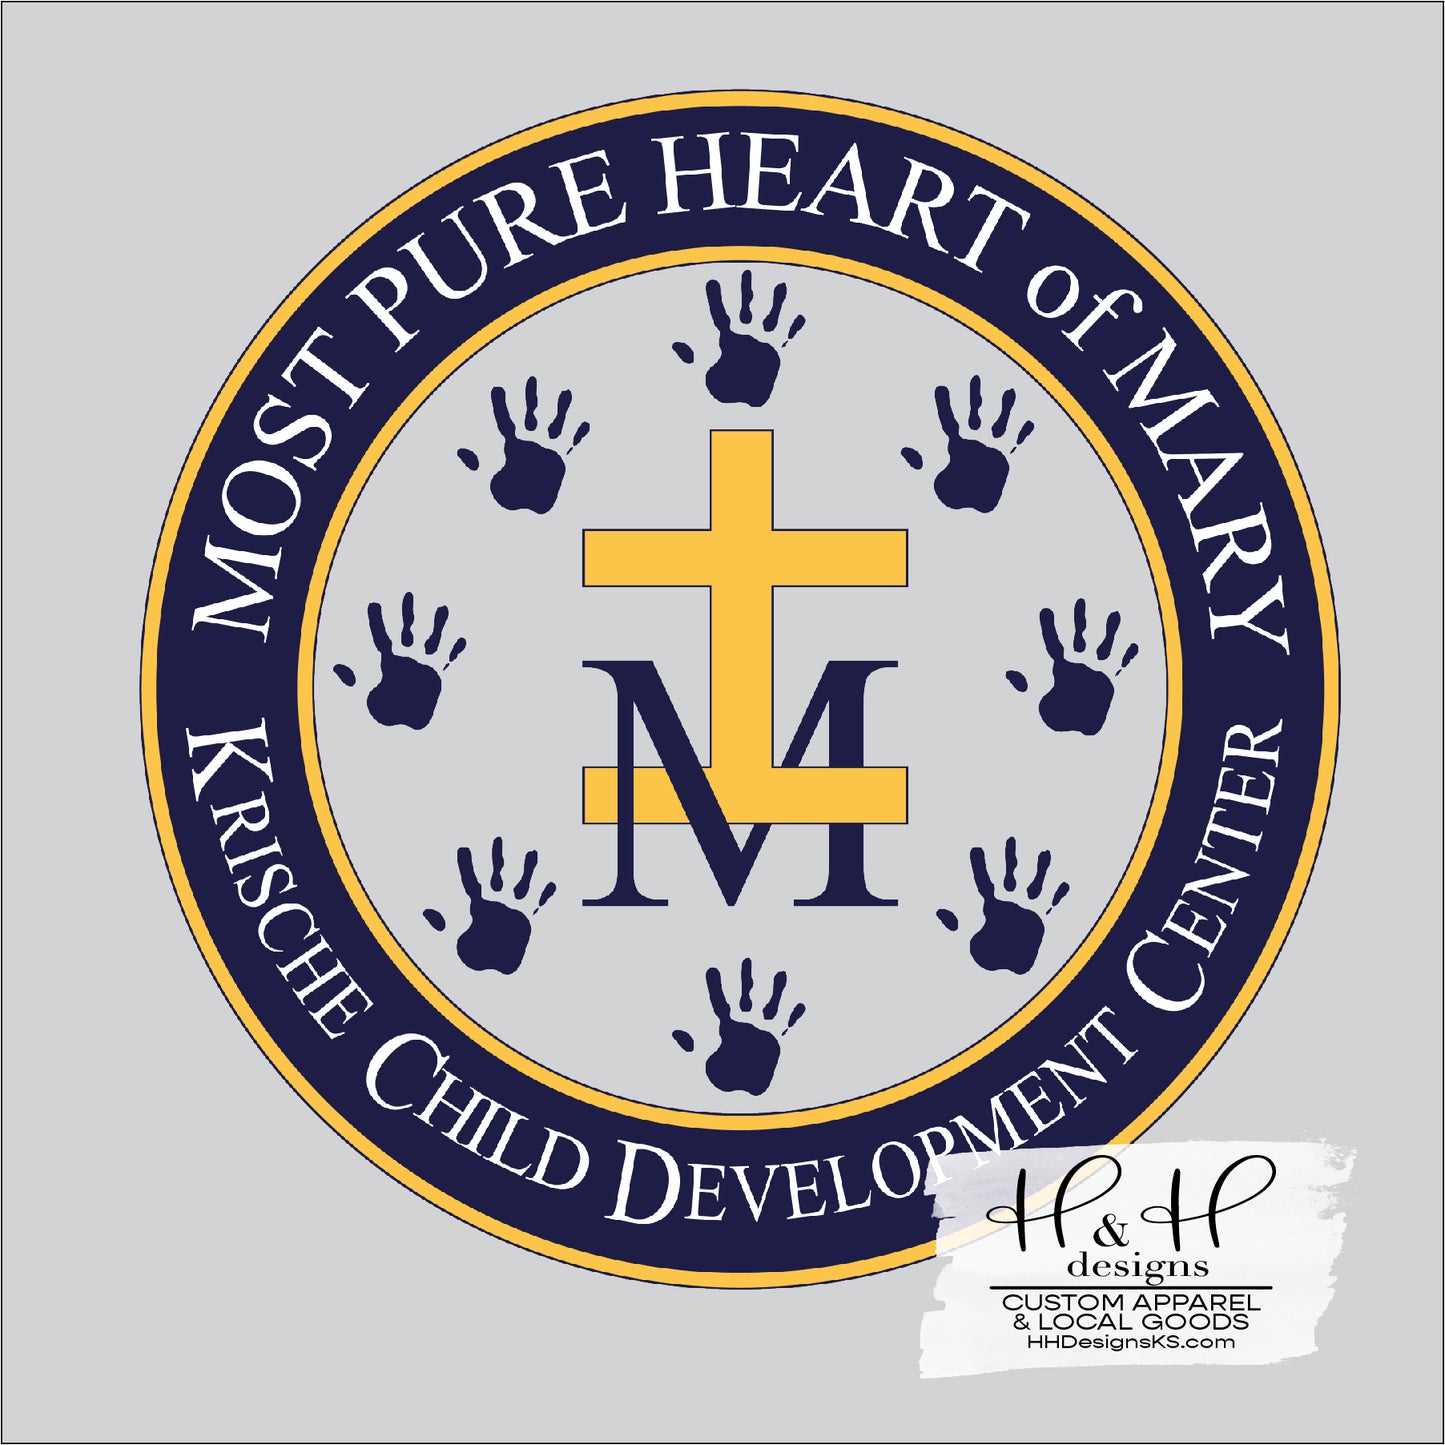 Krische Child Development Center  - Most Pure Heart of Mary Fundraiser